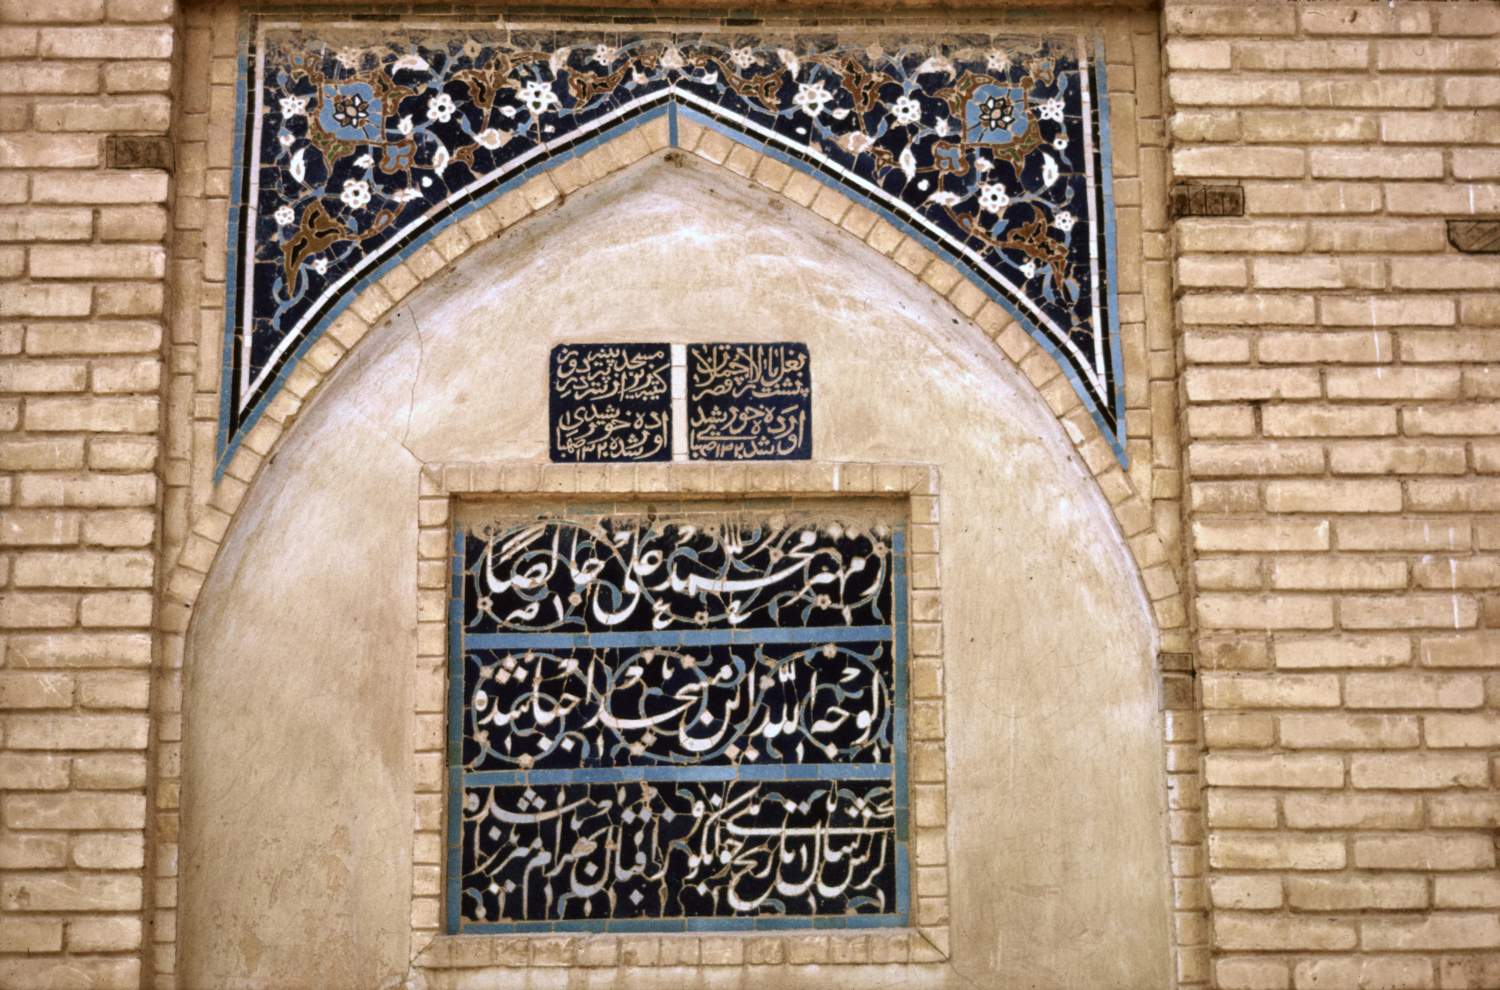 View of tile mosaic spandrel and inscription in nasta'liq script.